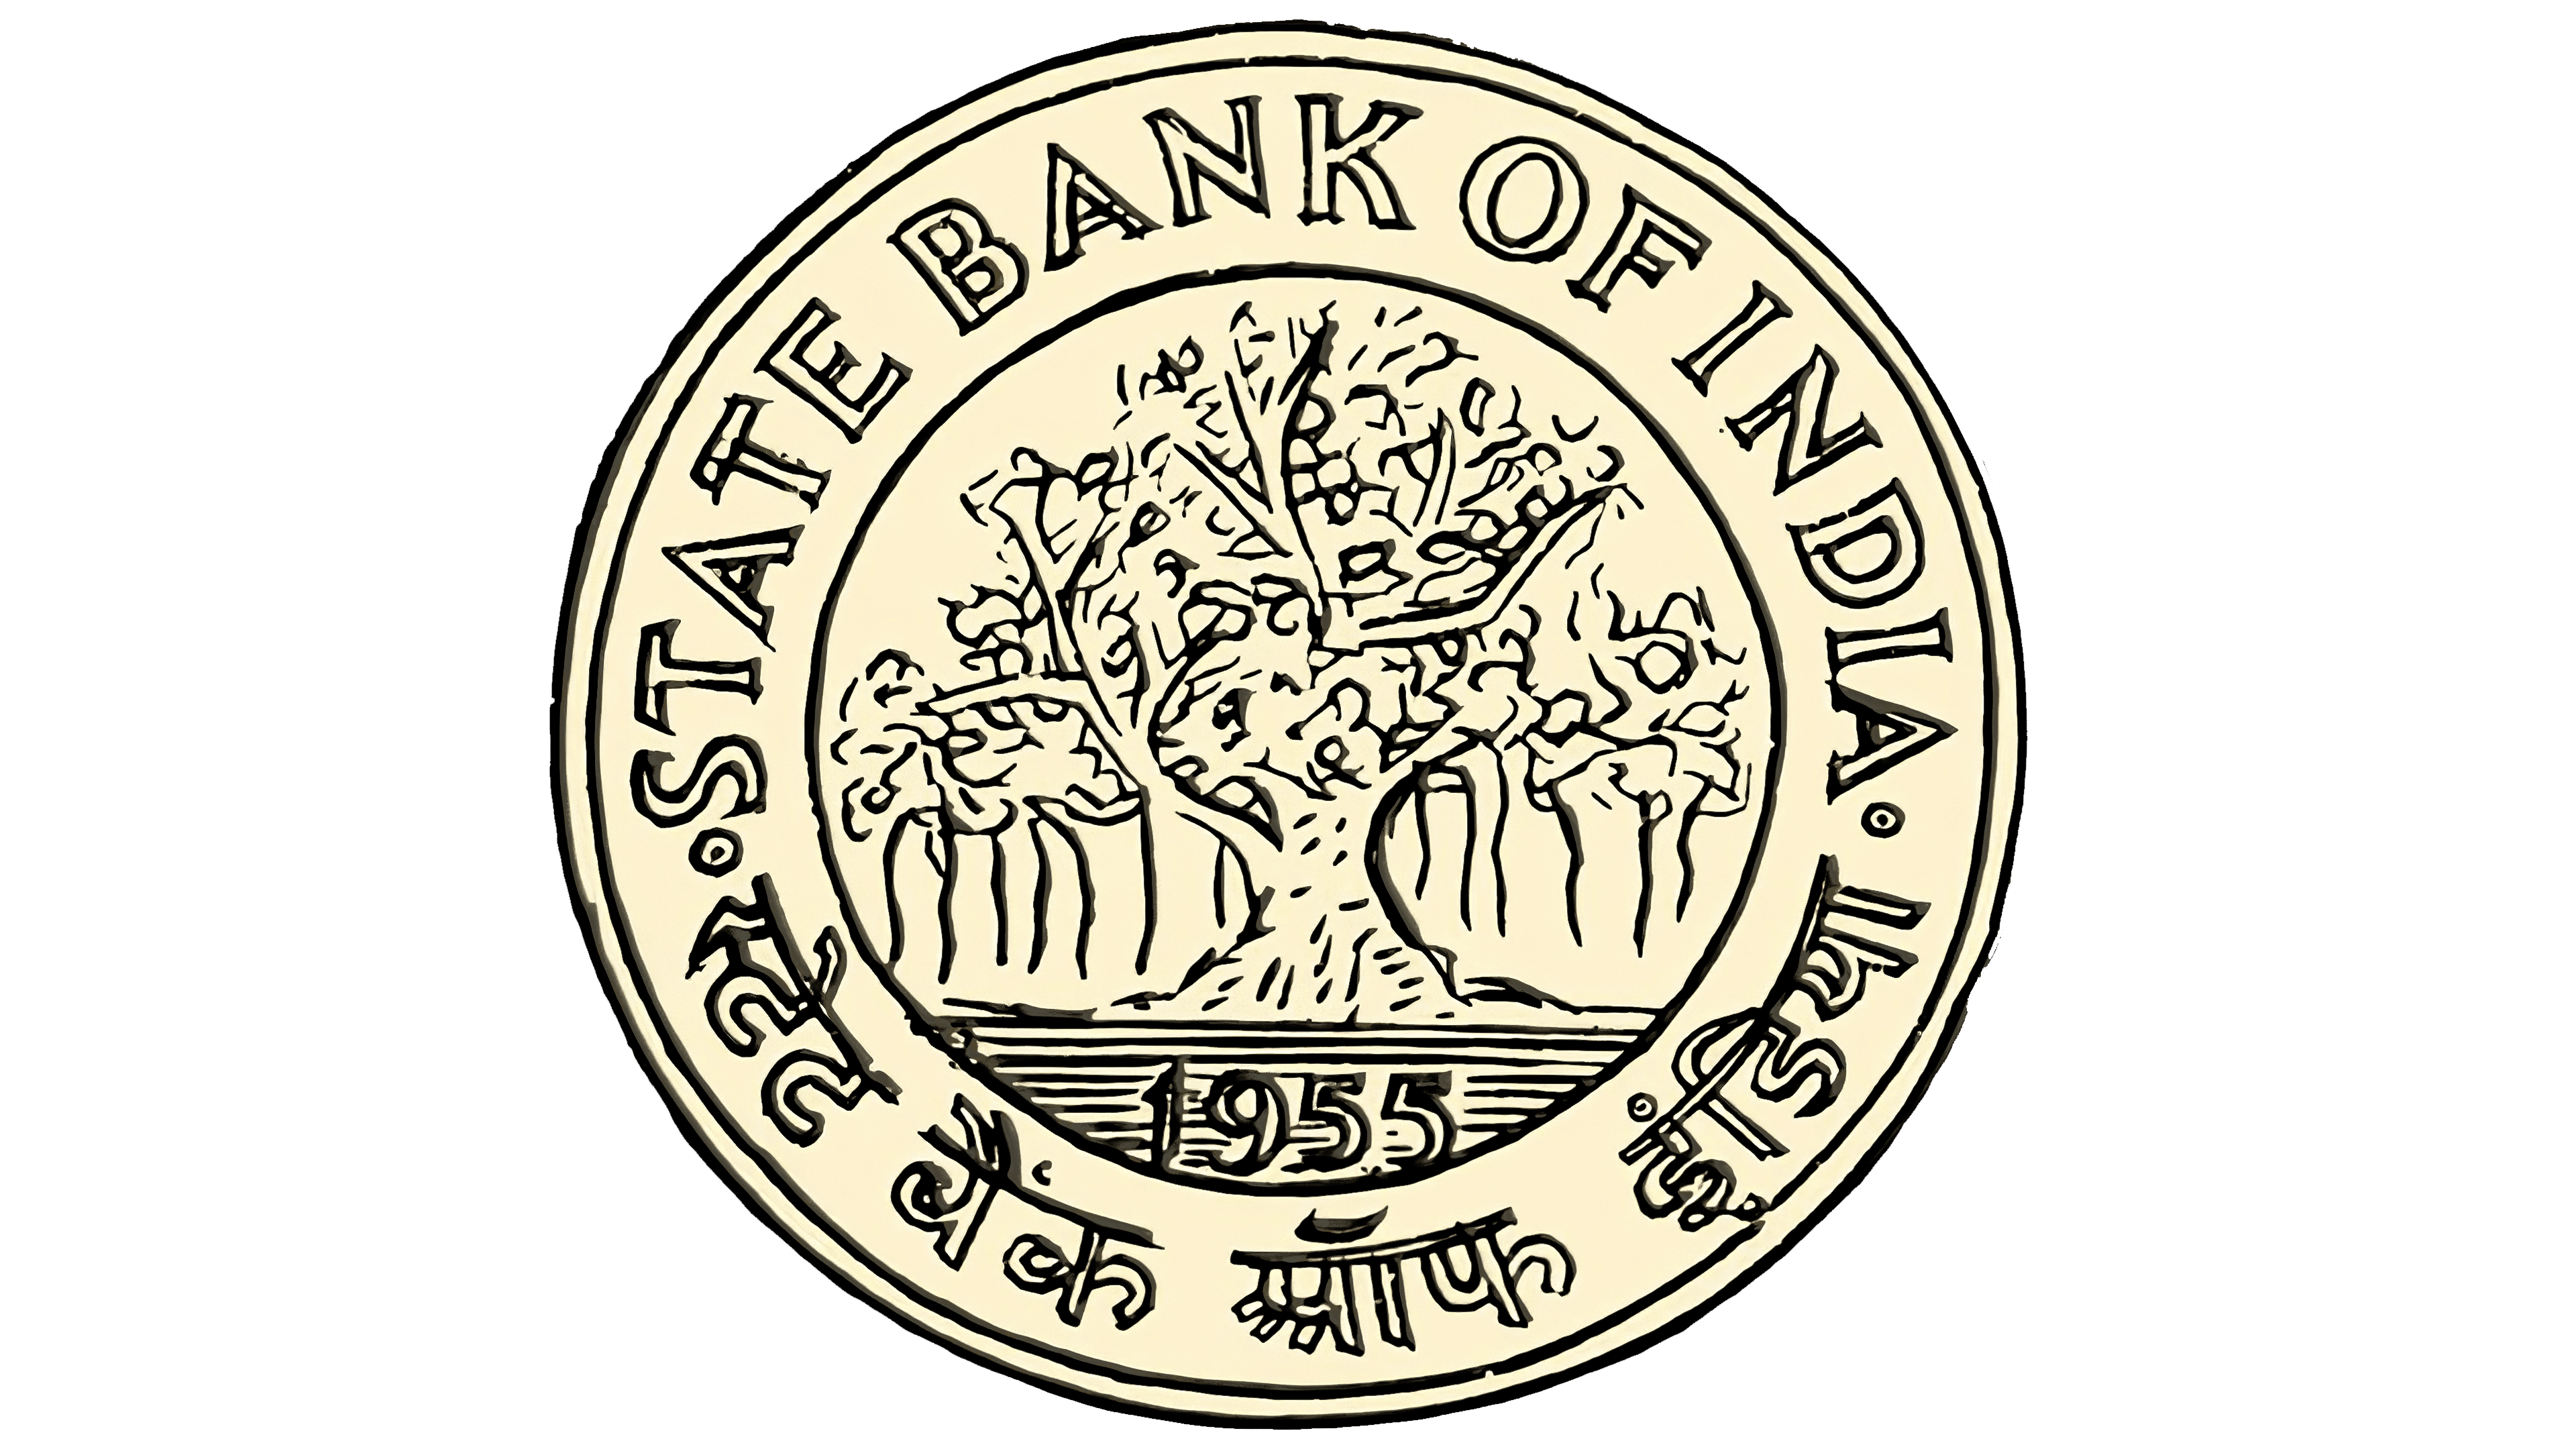 State Bank of India Reveals New Logo Design - Logo-Designer.co